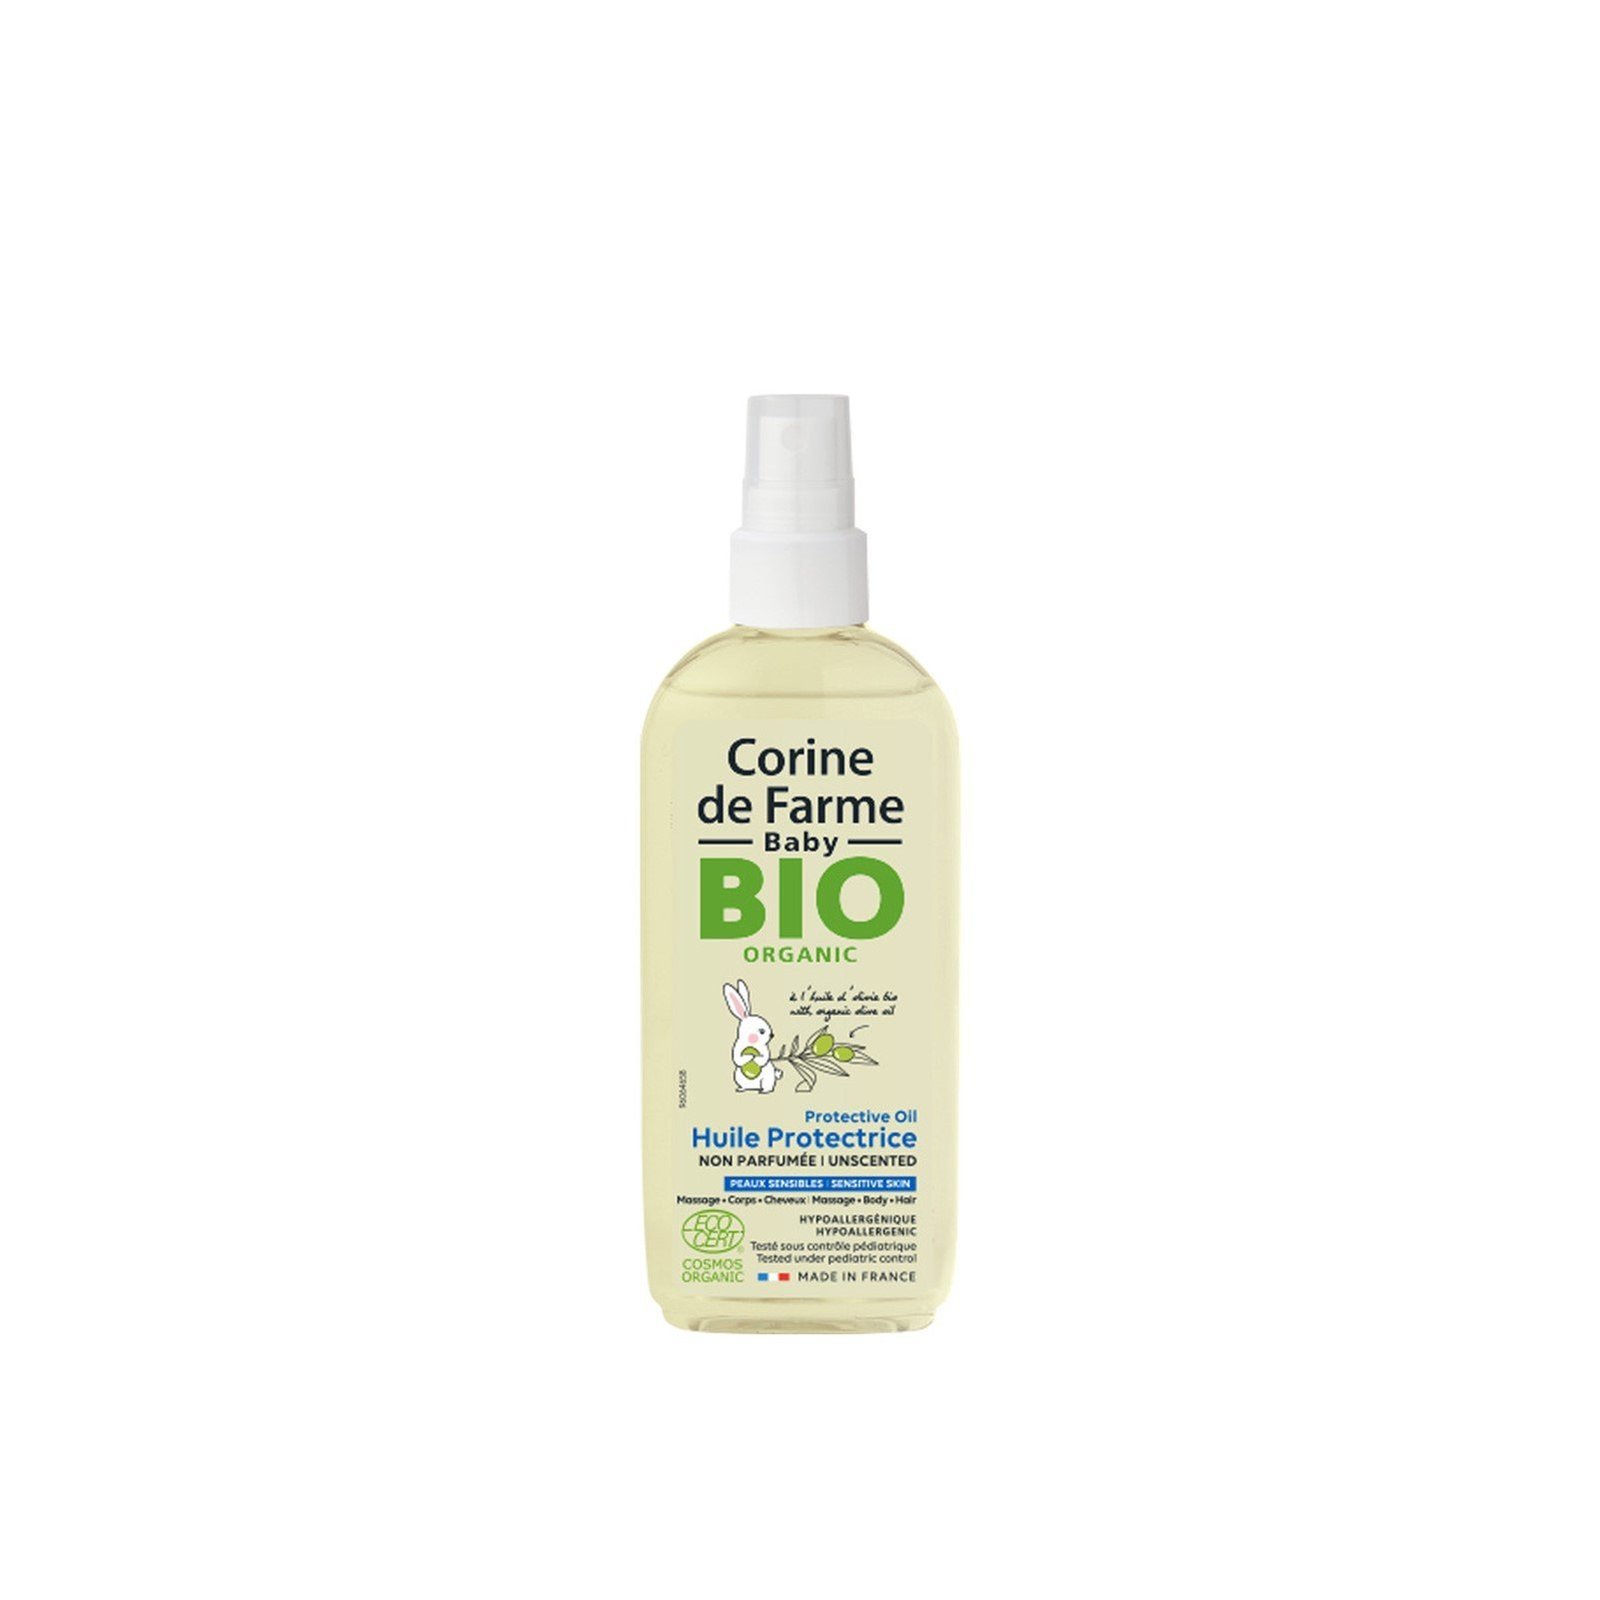 Corine de Farme Baby Bio Organic Protective Oil 100ml